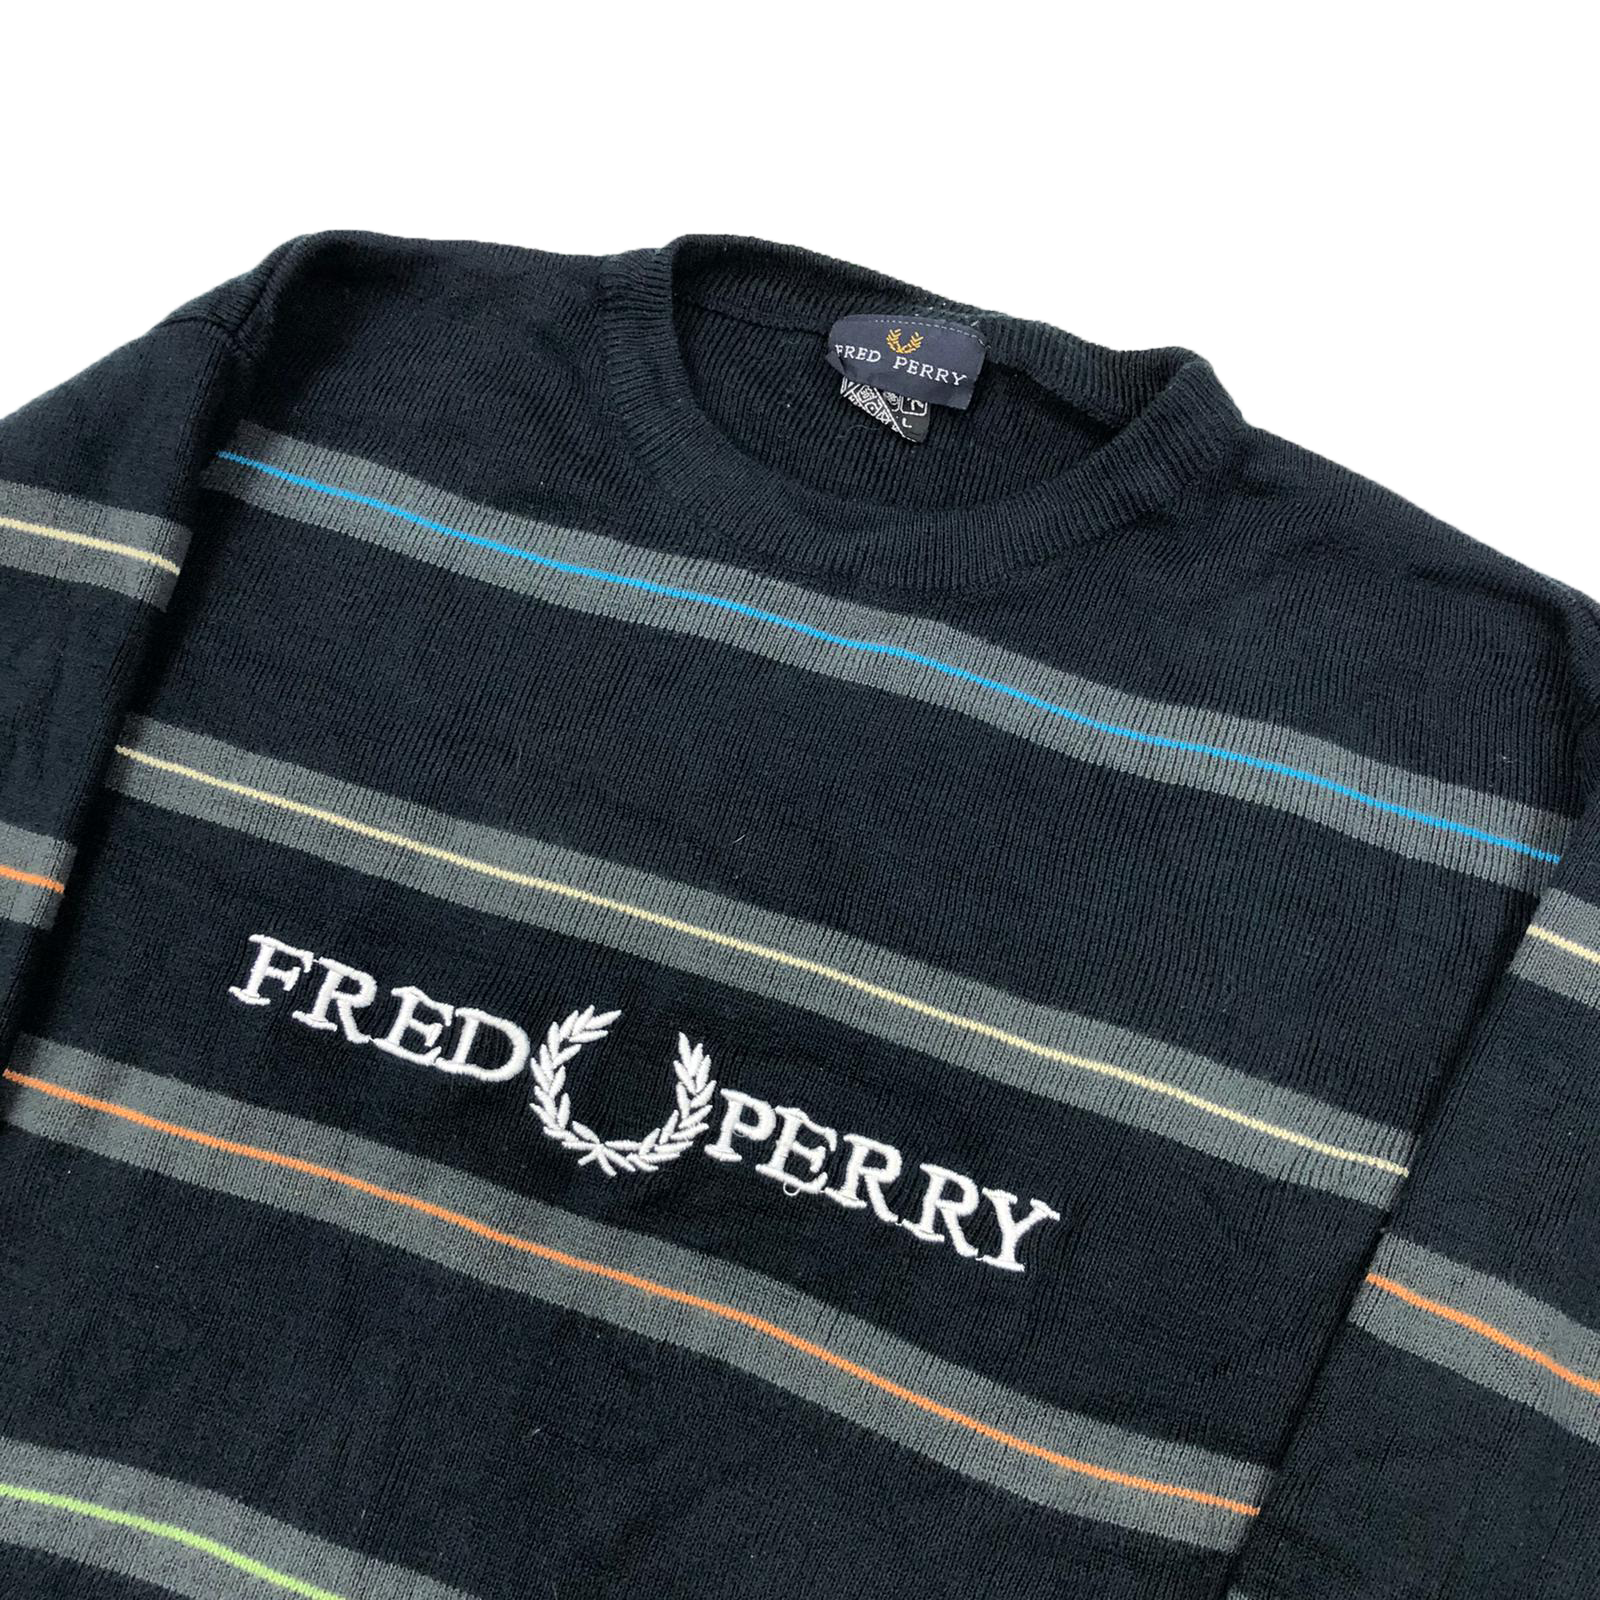 Fred Perry sweatshirt